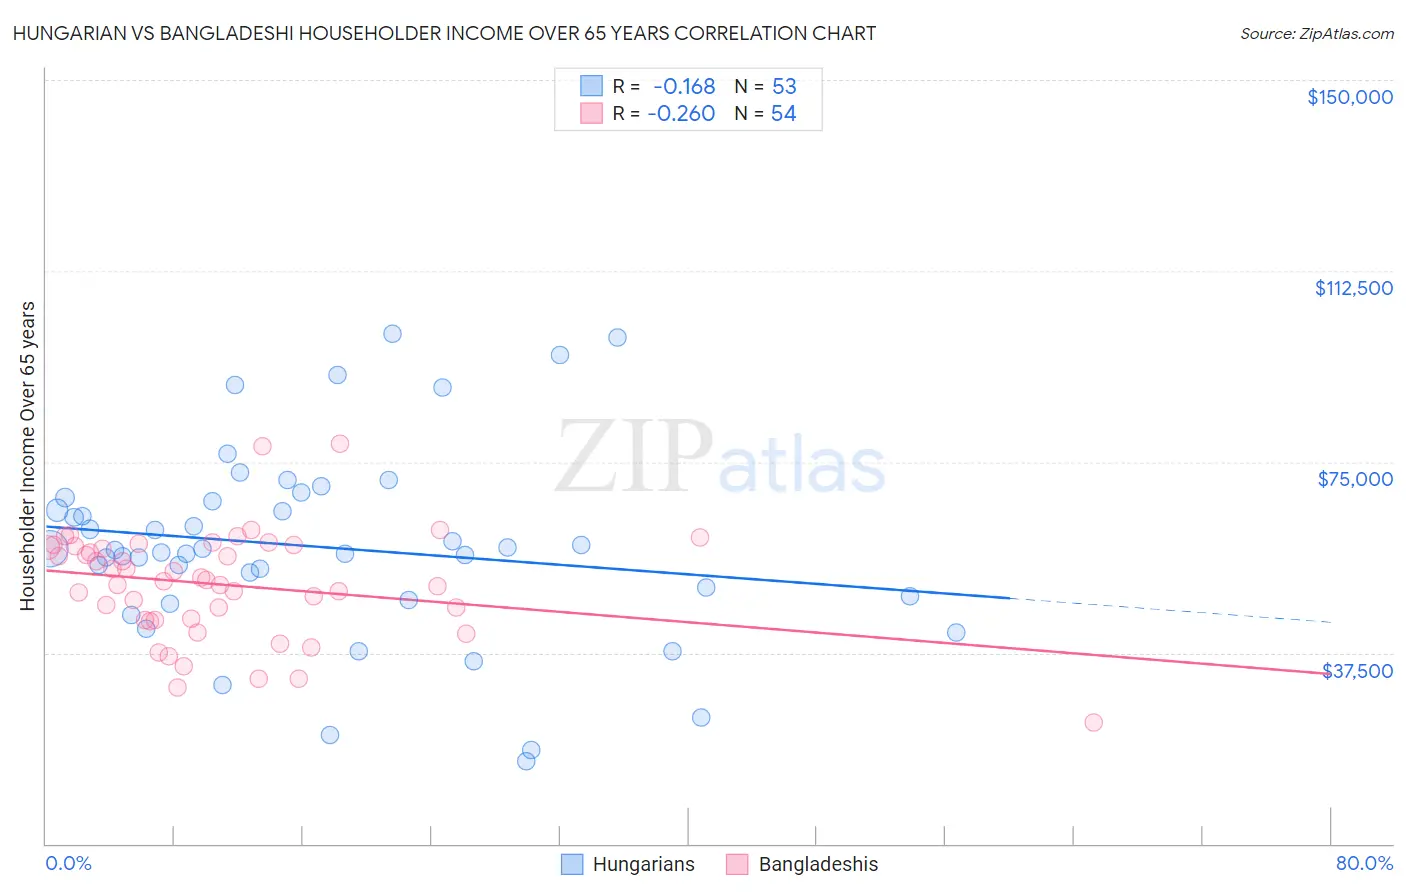 Hungarian vs Bangladeshi Householder Income Over 65 years